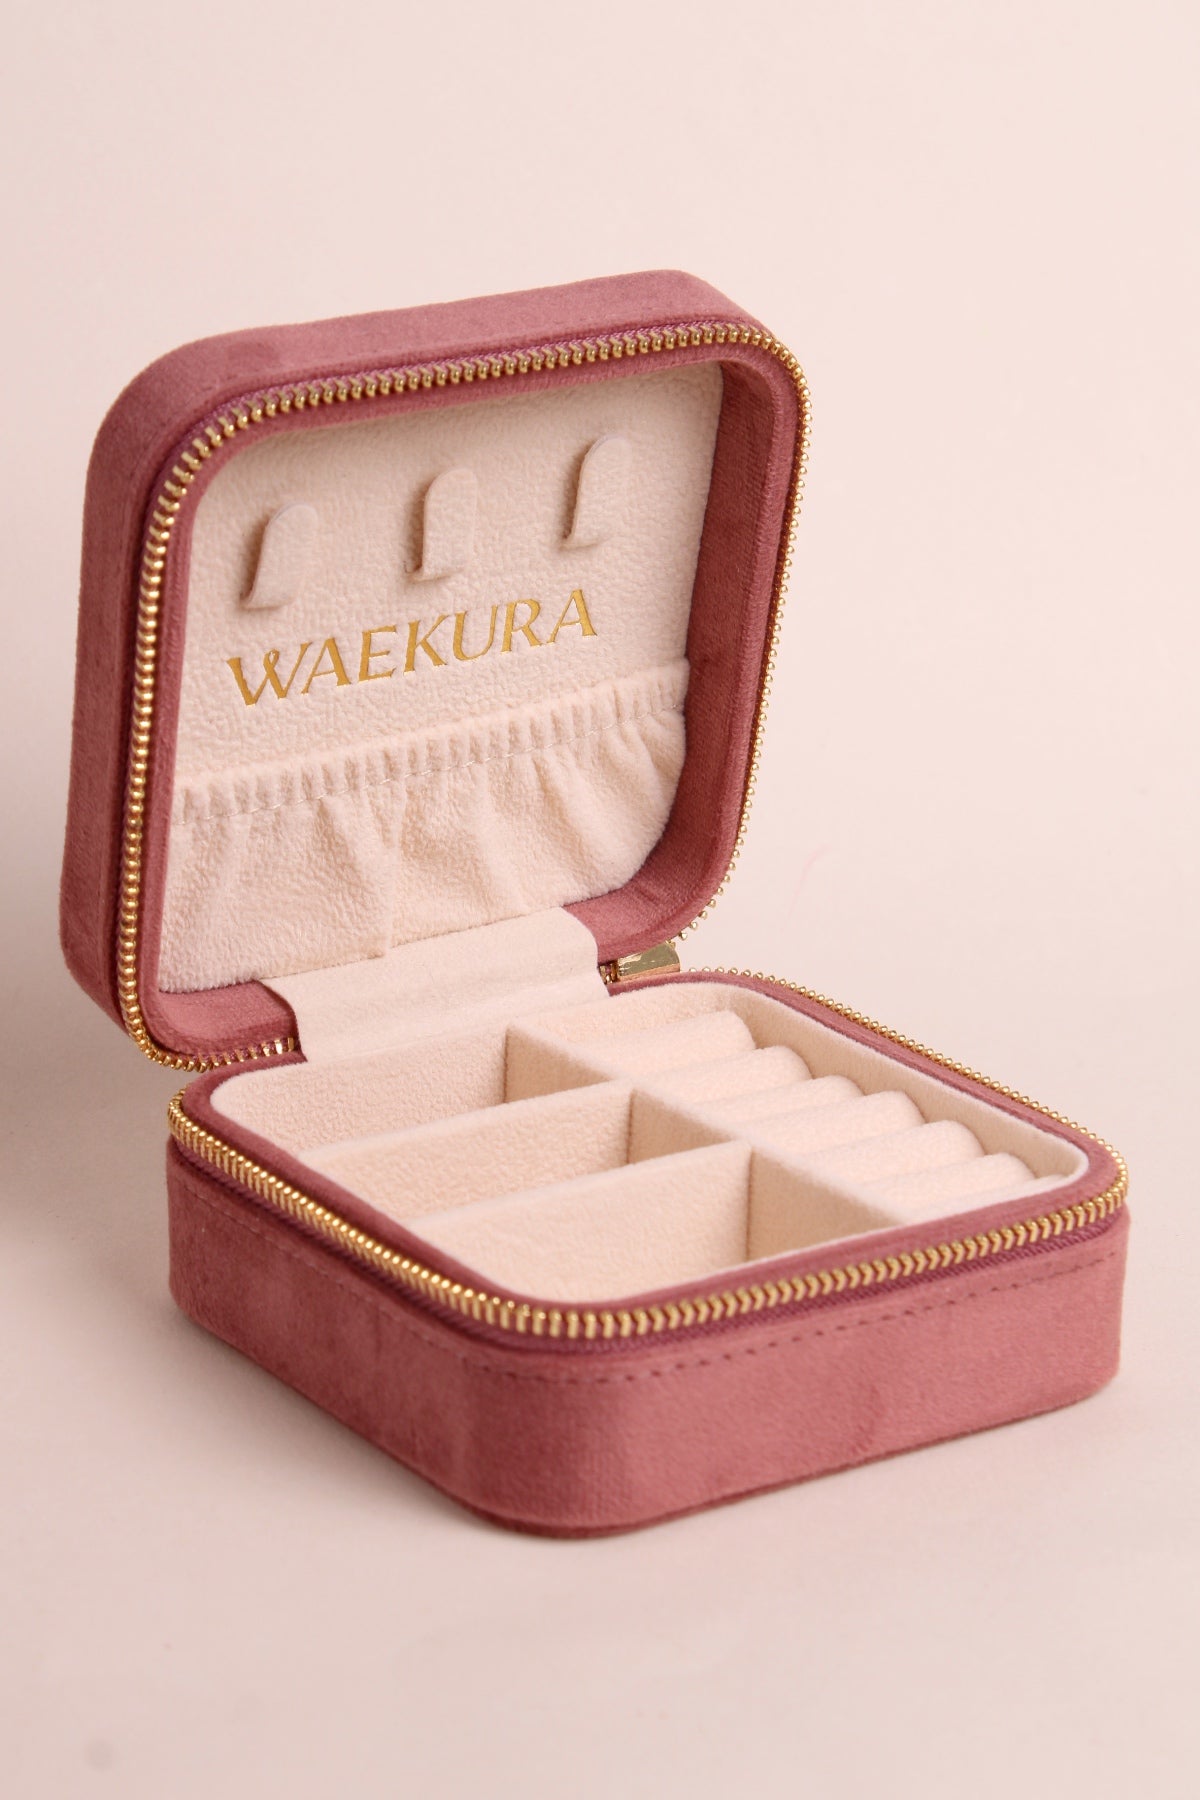 La Boîte à Bijoux - Orchid pink - waekura